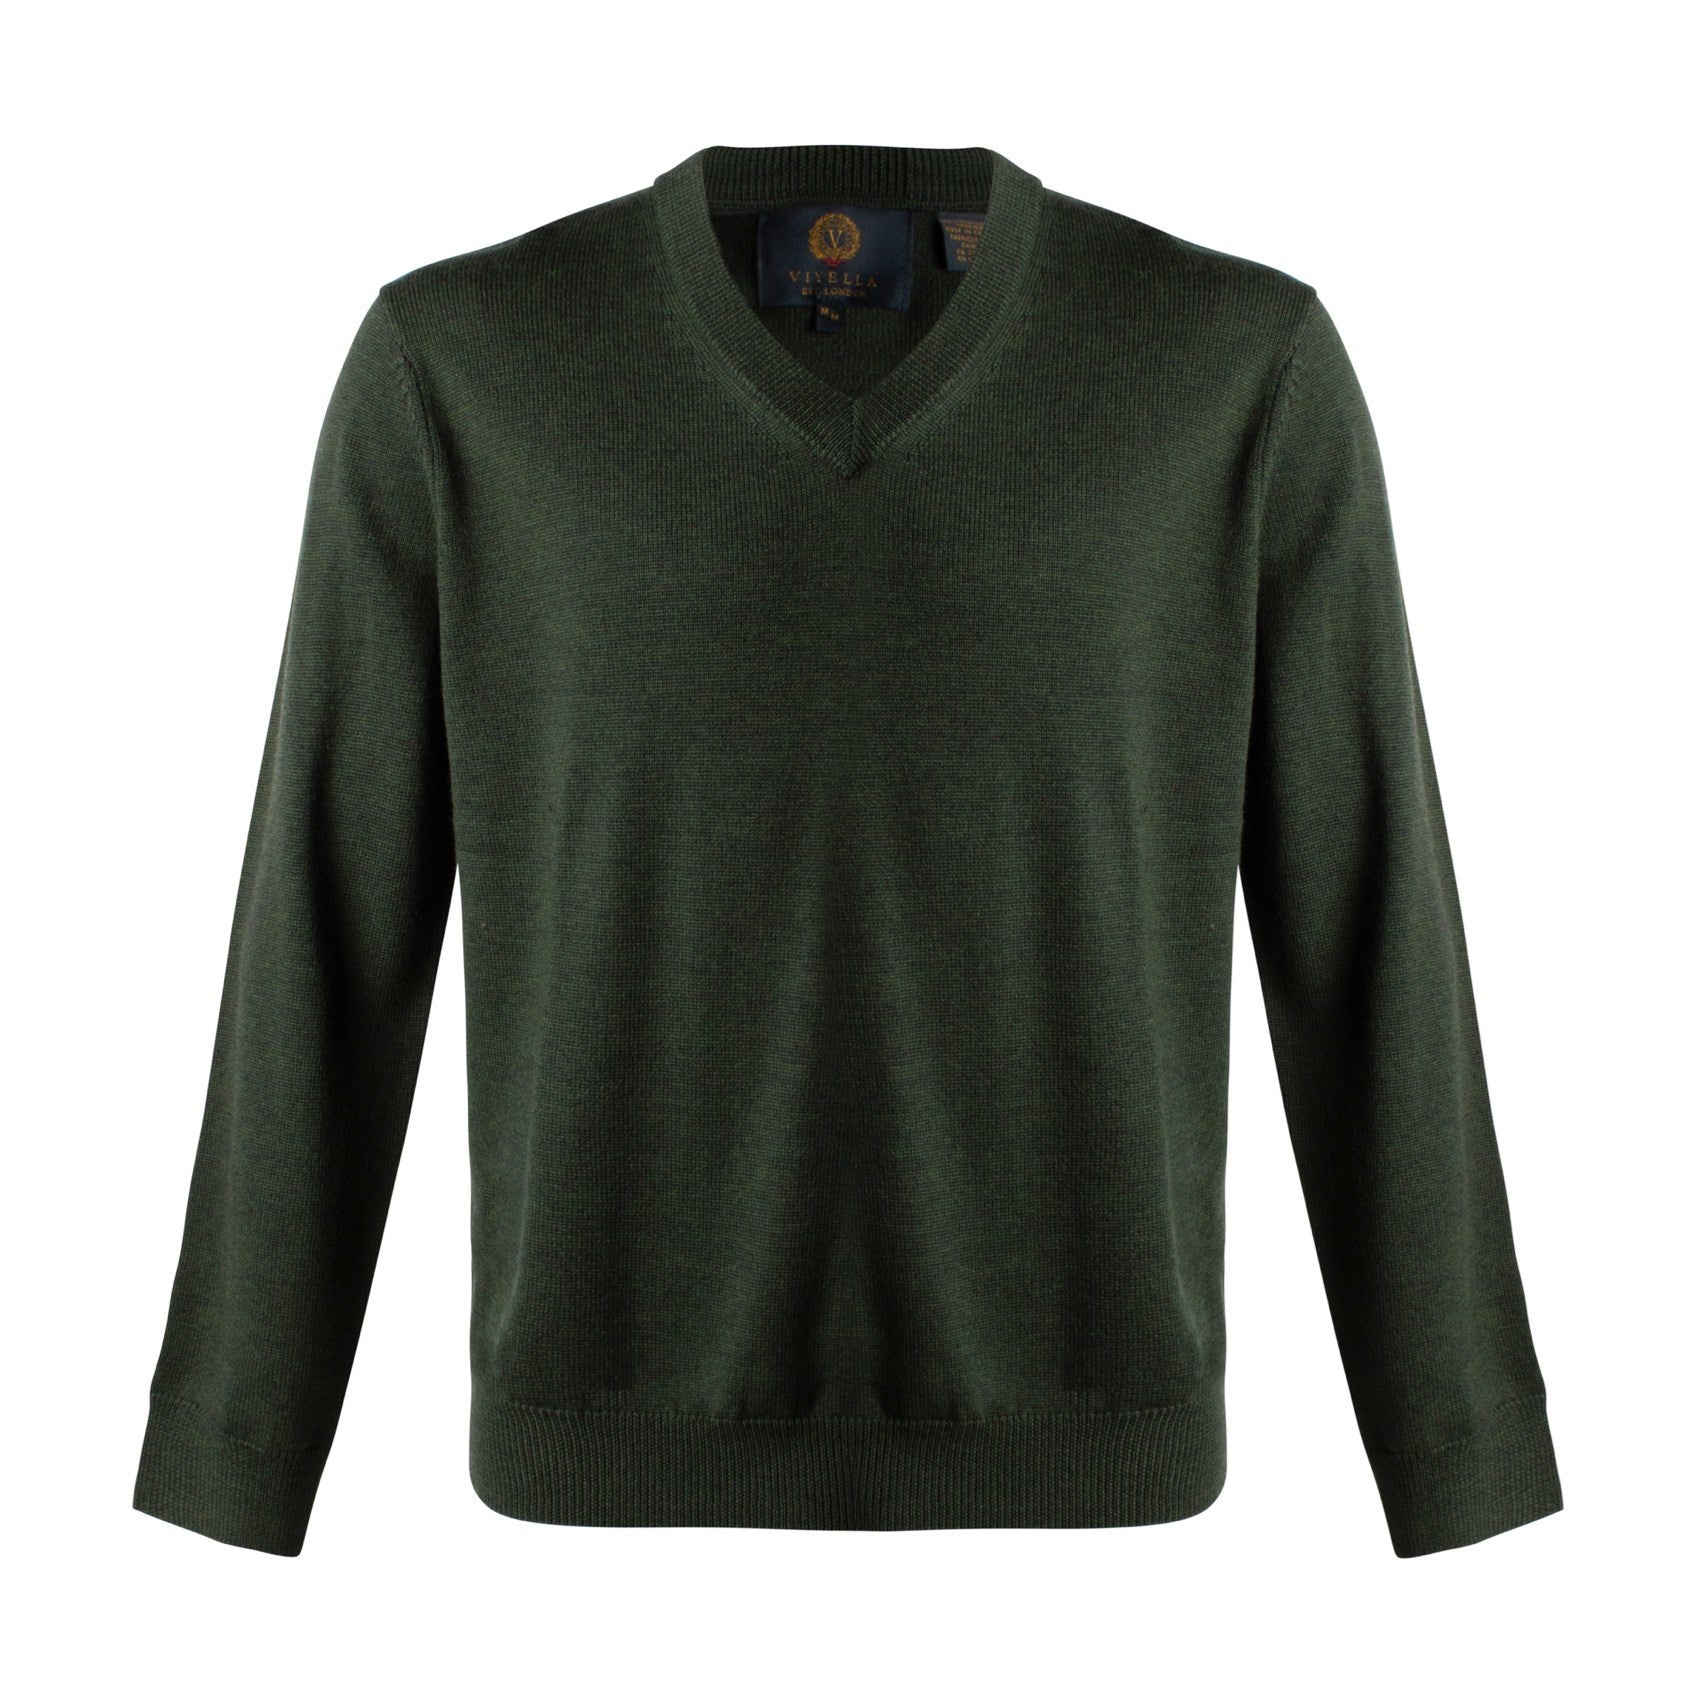 Extra Fine 'Zegna Baruffa' Merino Wool V-Neck Sweater in Dark Green by Viyella